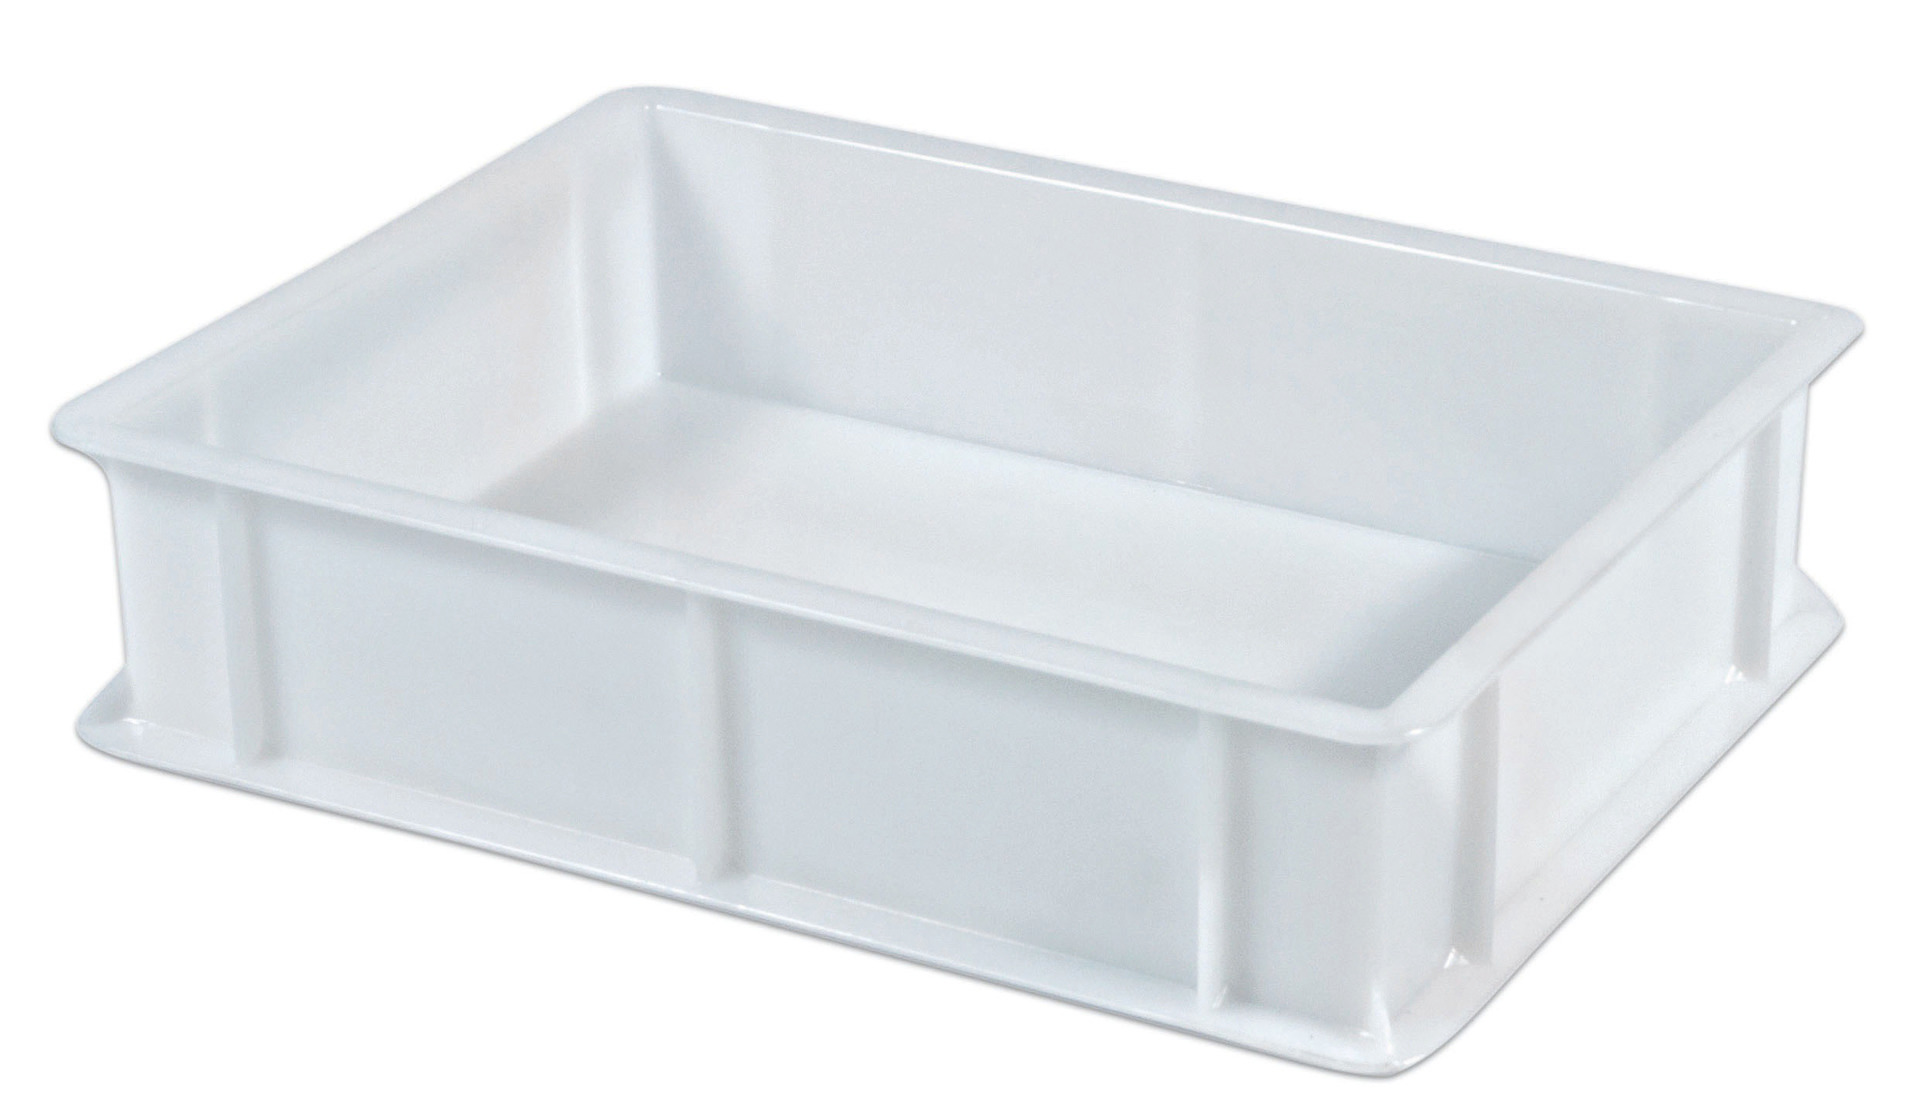 Transportbox Polyethylen weiß 300 x 400 x 100 mm